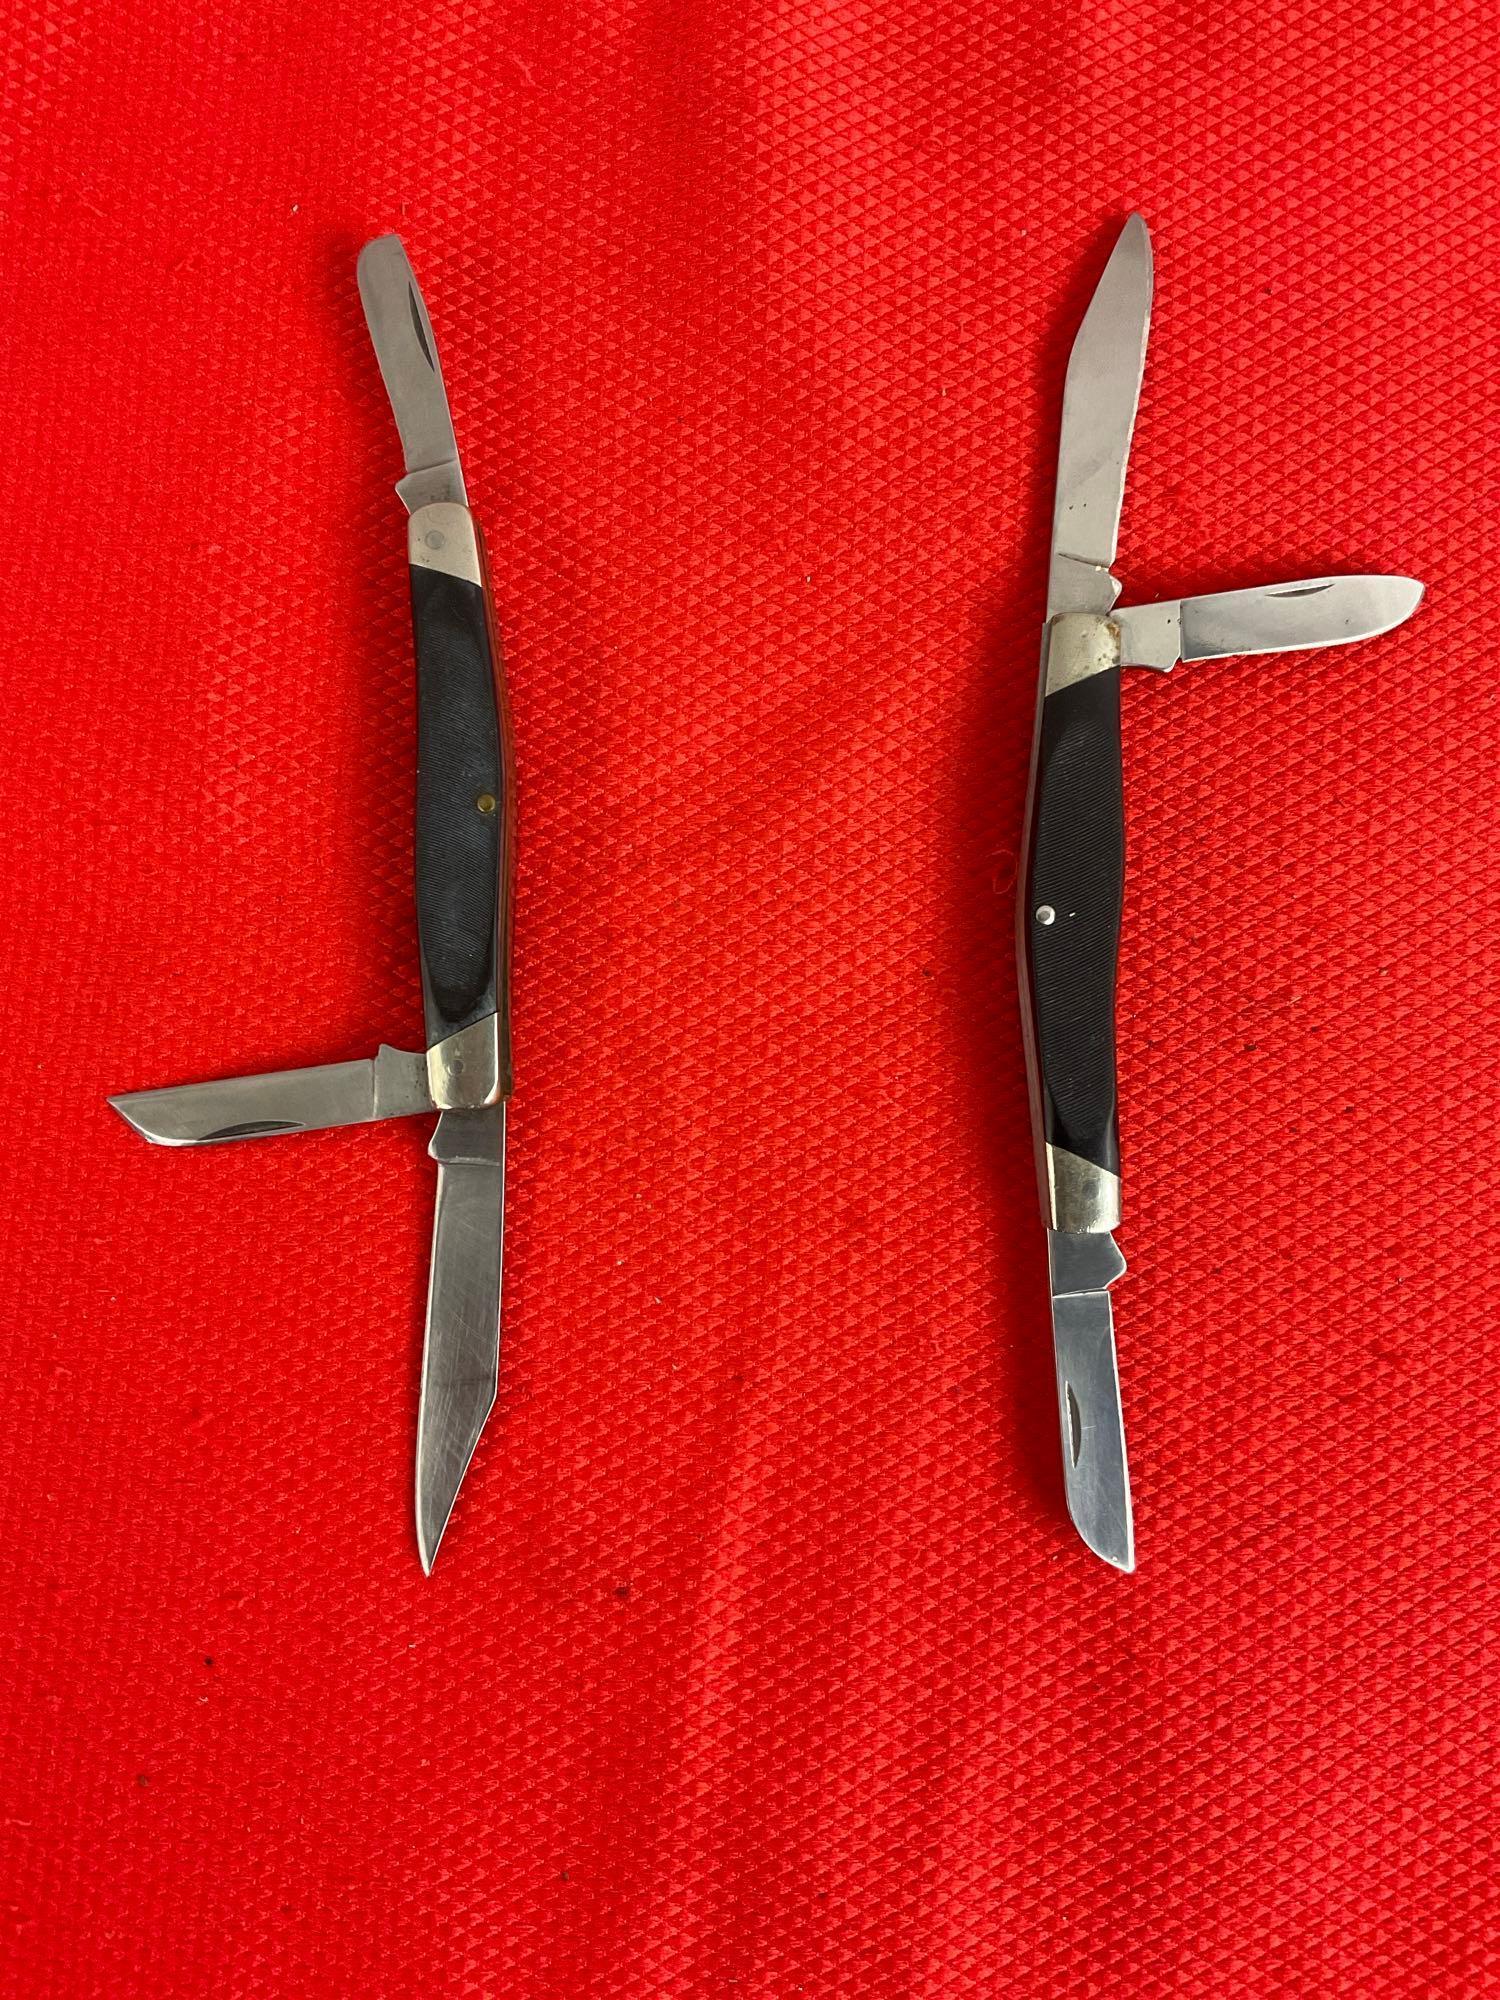 2 pcs Vintage Buck 3" Steel Folding 3-Blade Stockman Pocket Knife Model 301 w/ Delrine Handles. As